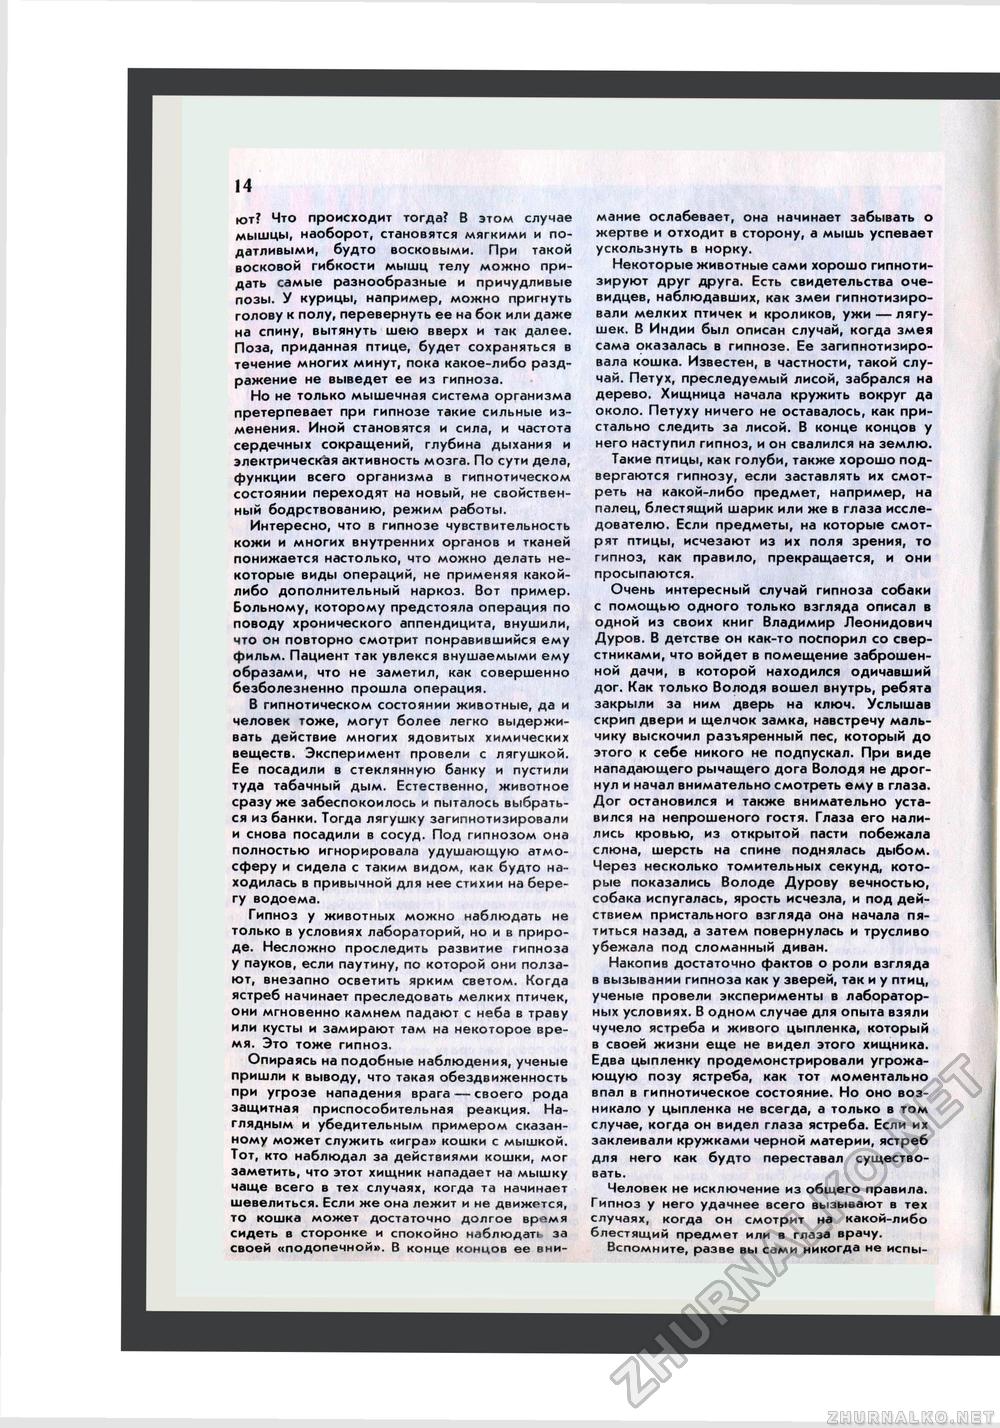 Юный Натуралист 1984-03, страница 16